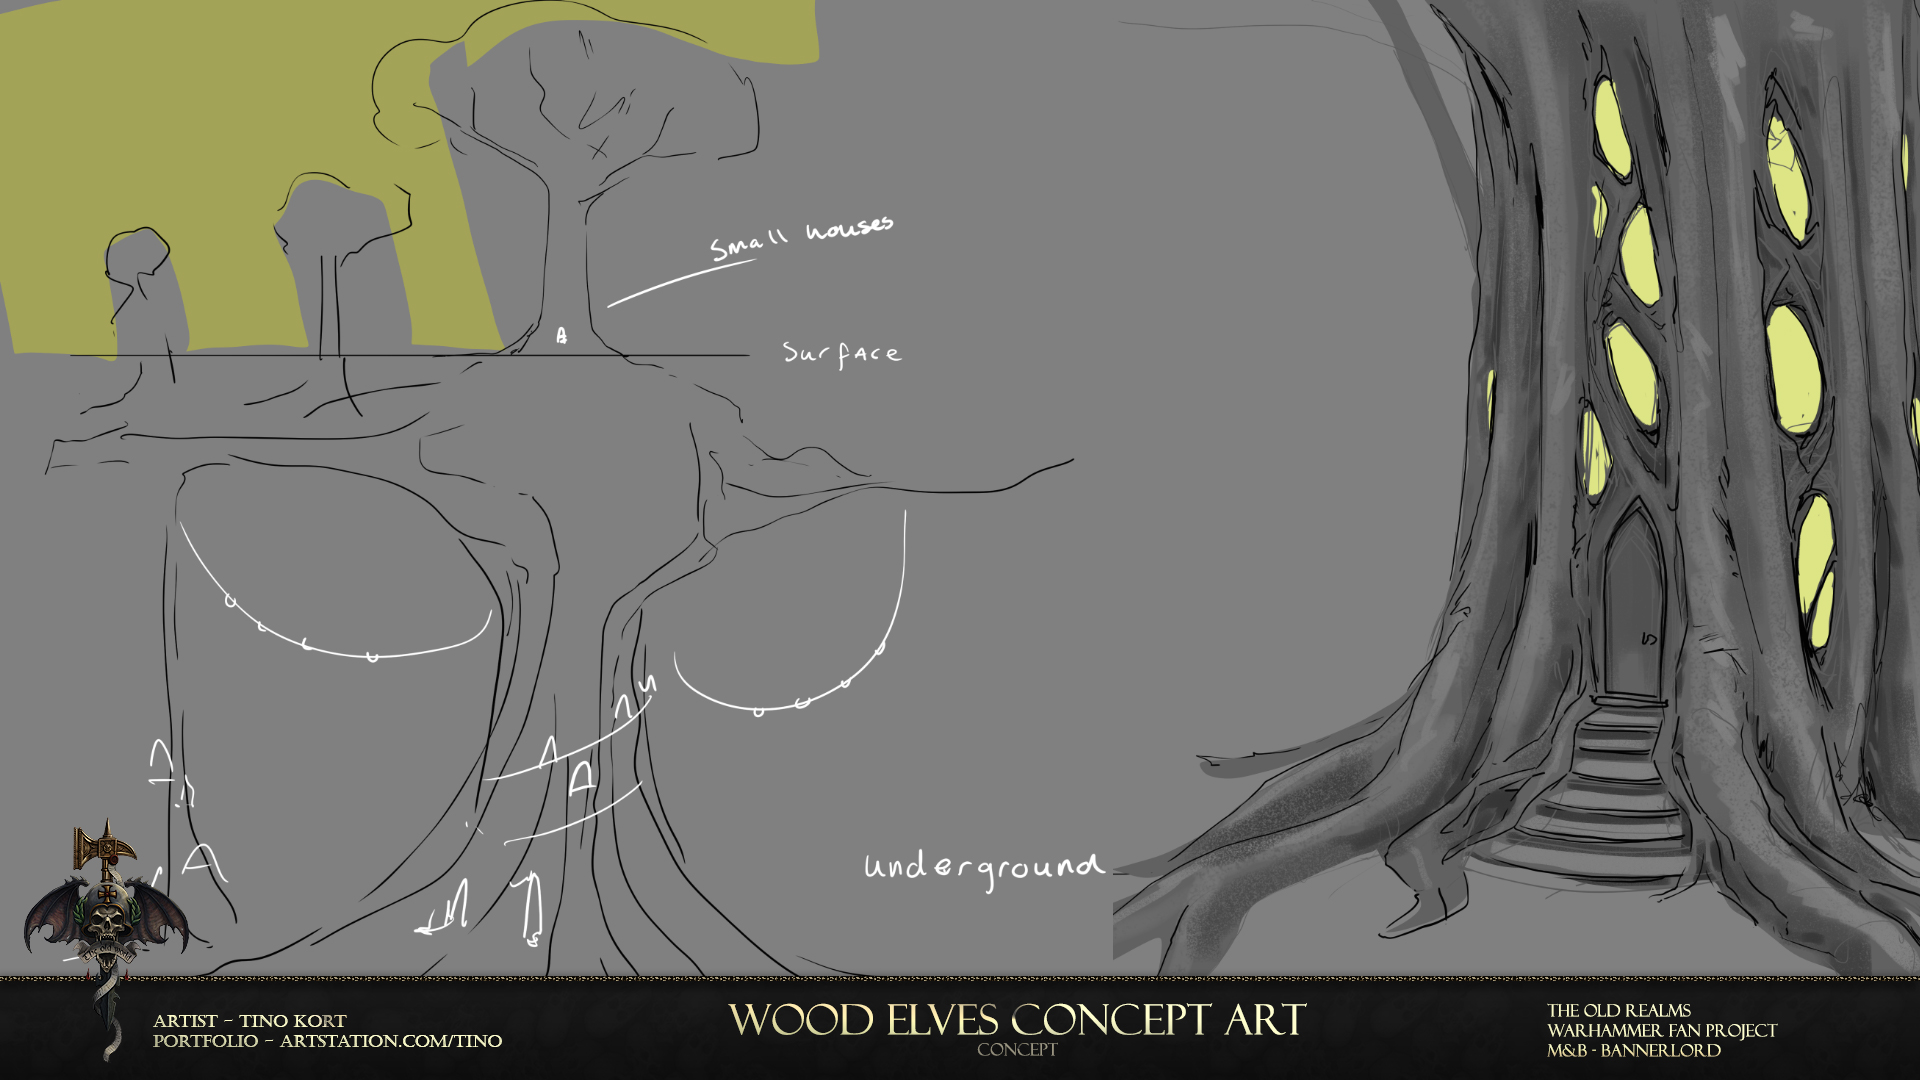 Wood elves concept art 2